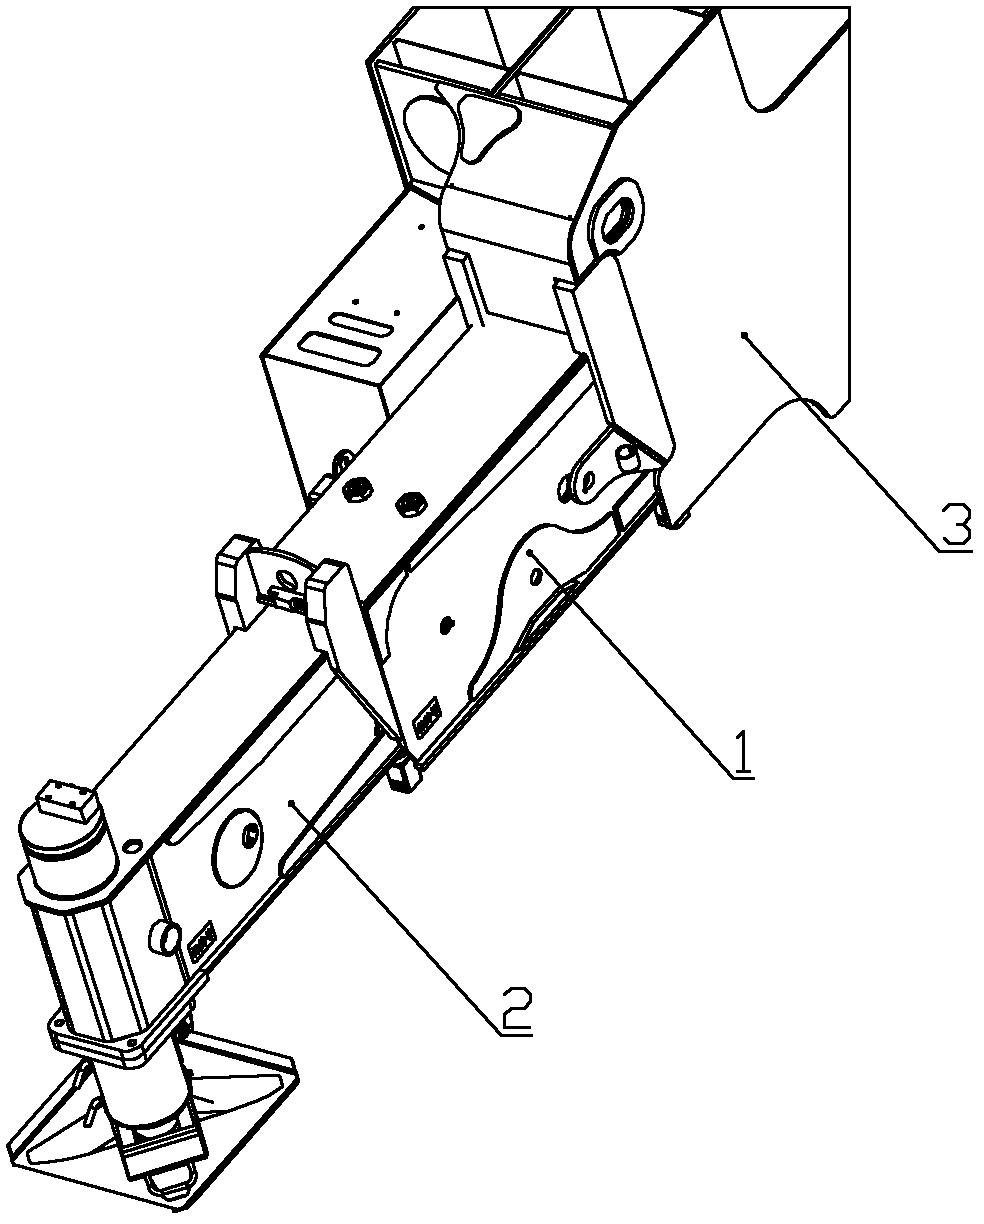 Crane support leg, support leg hydraulic system and crane